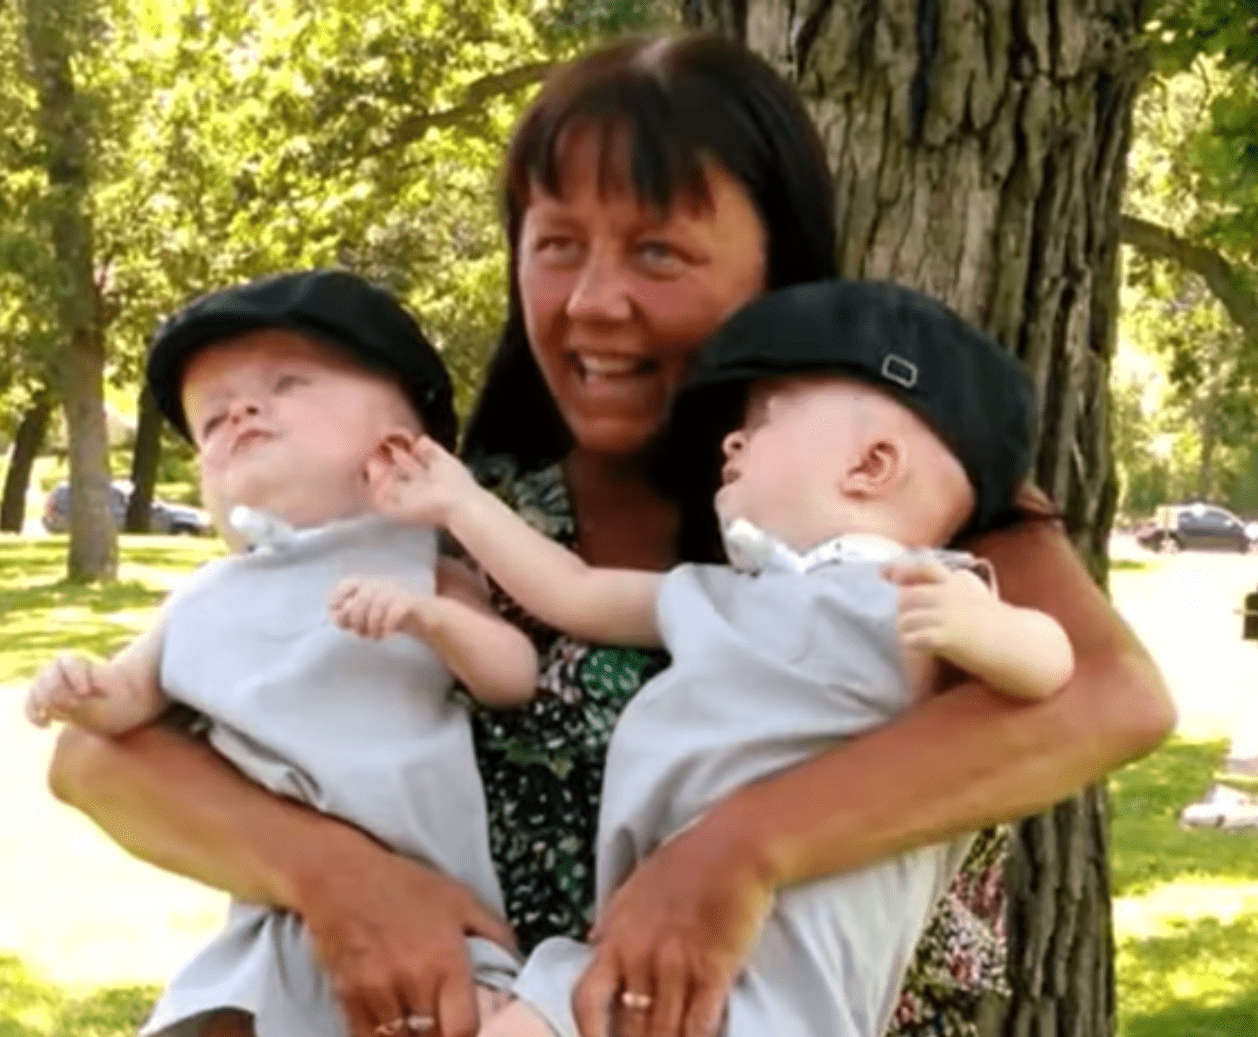 Linda Trepanier with 3-year-old twins Matthew and Marshall Trepanier. | Source: Youtube.com/Inside Edition